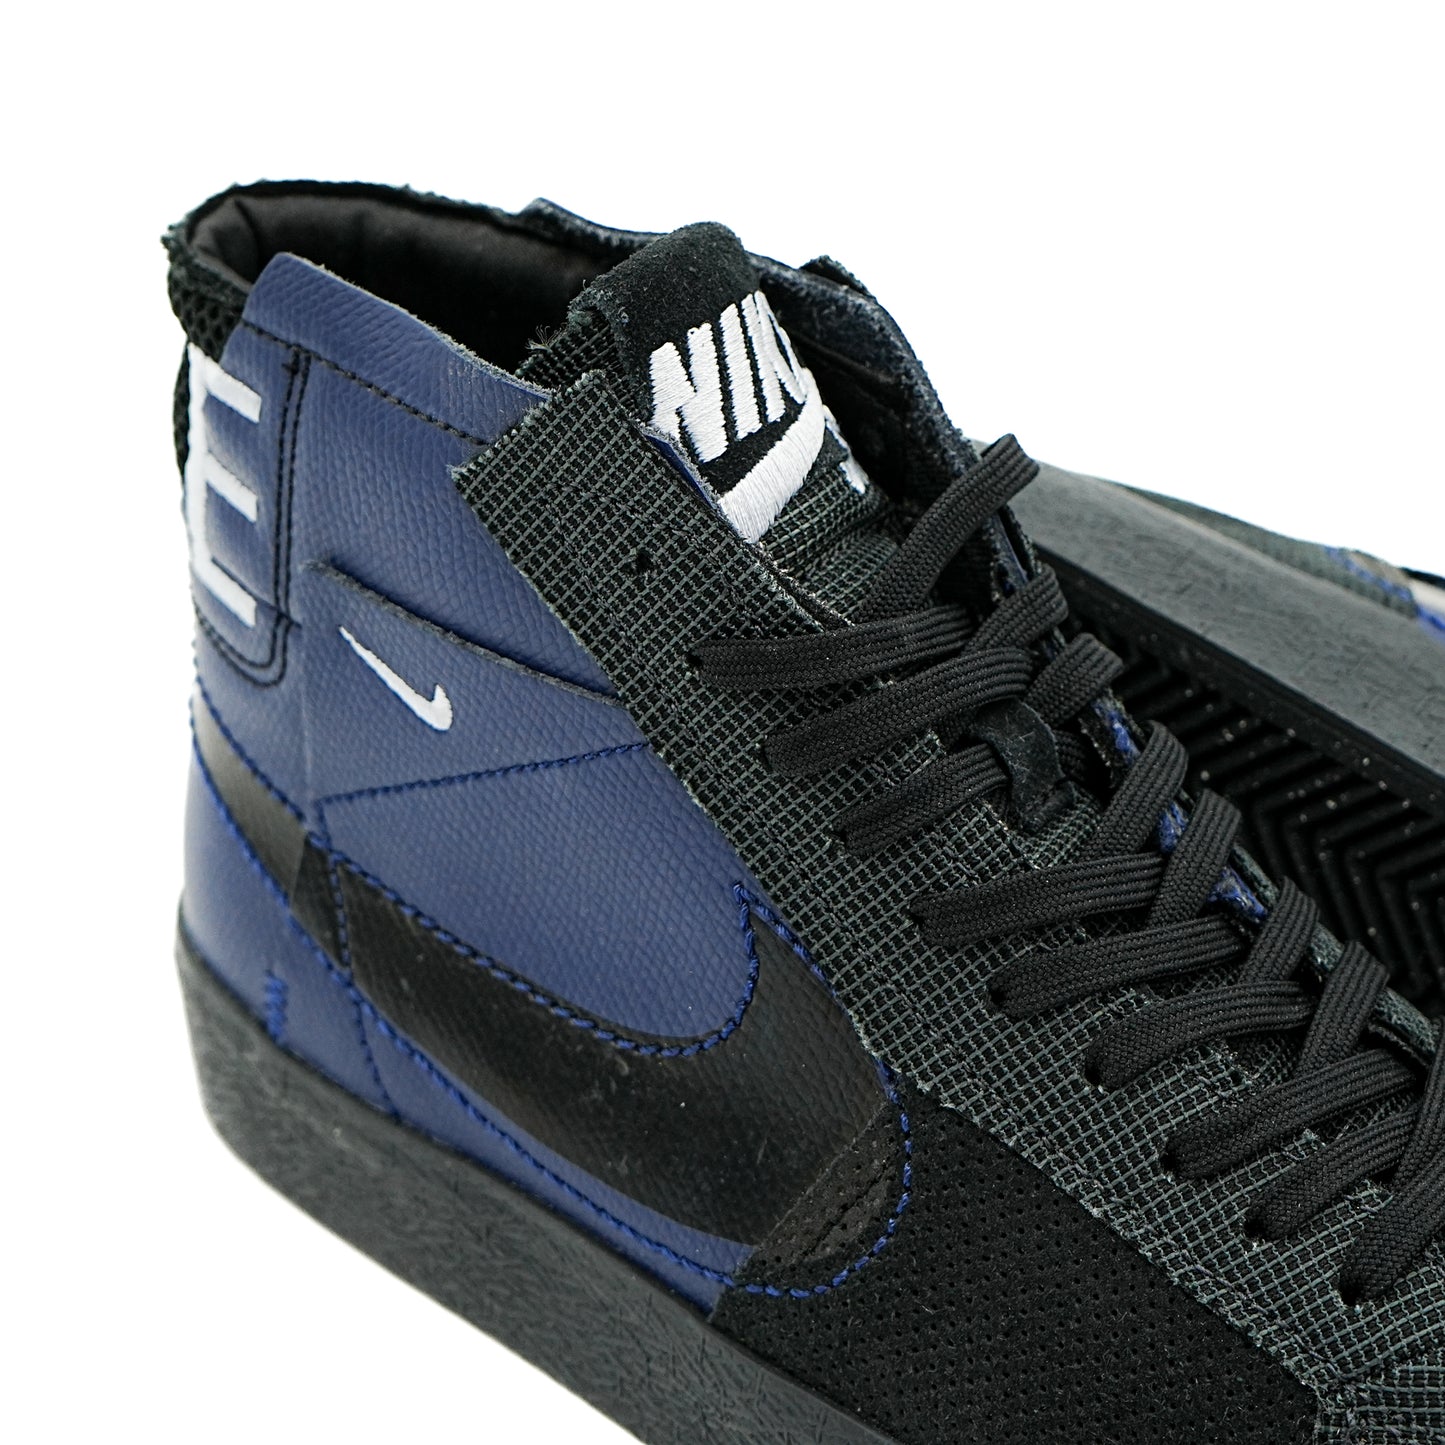 Nike SB Blazer Mid Premium - Midnight Navy/Black